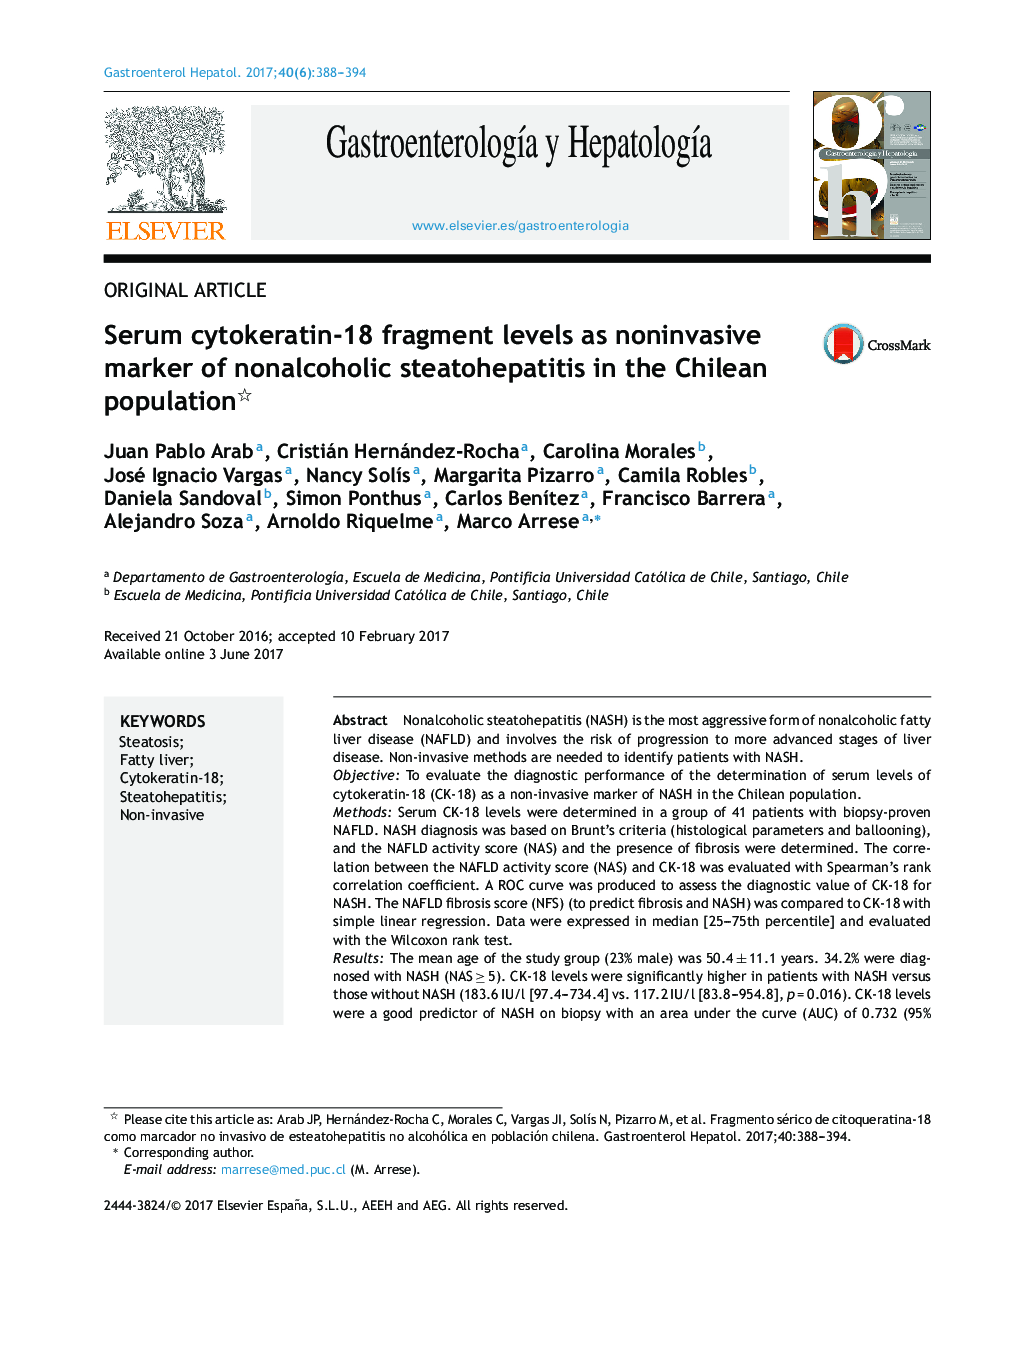 Serum cytokeratin-18 fragment levels as noninvasive marker of nonalcoholic steatohepatitis in the Chilean population